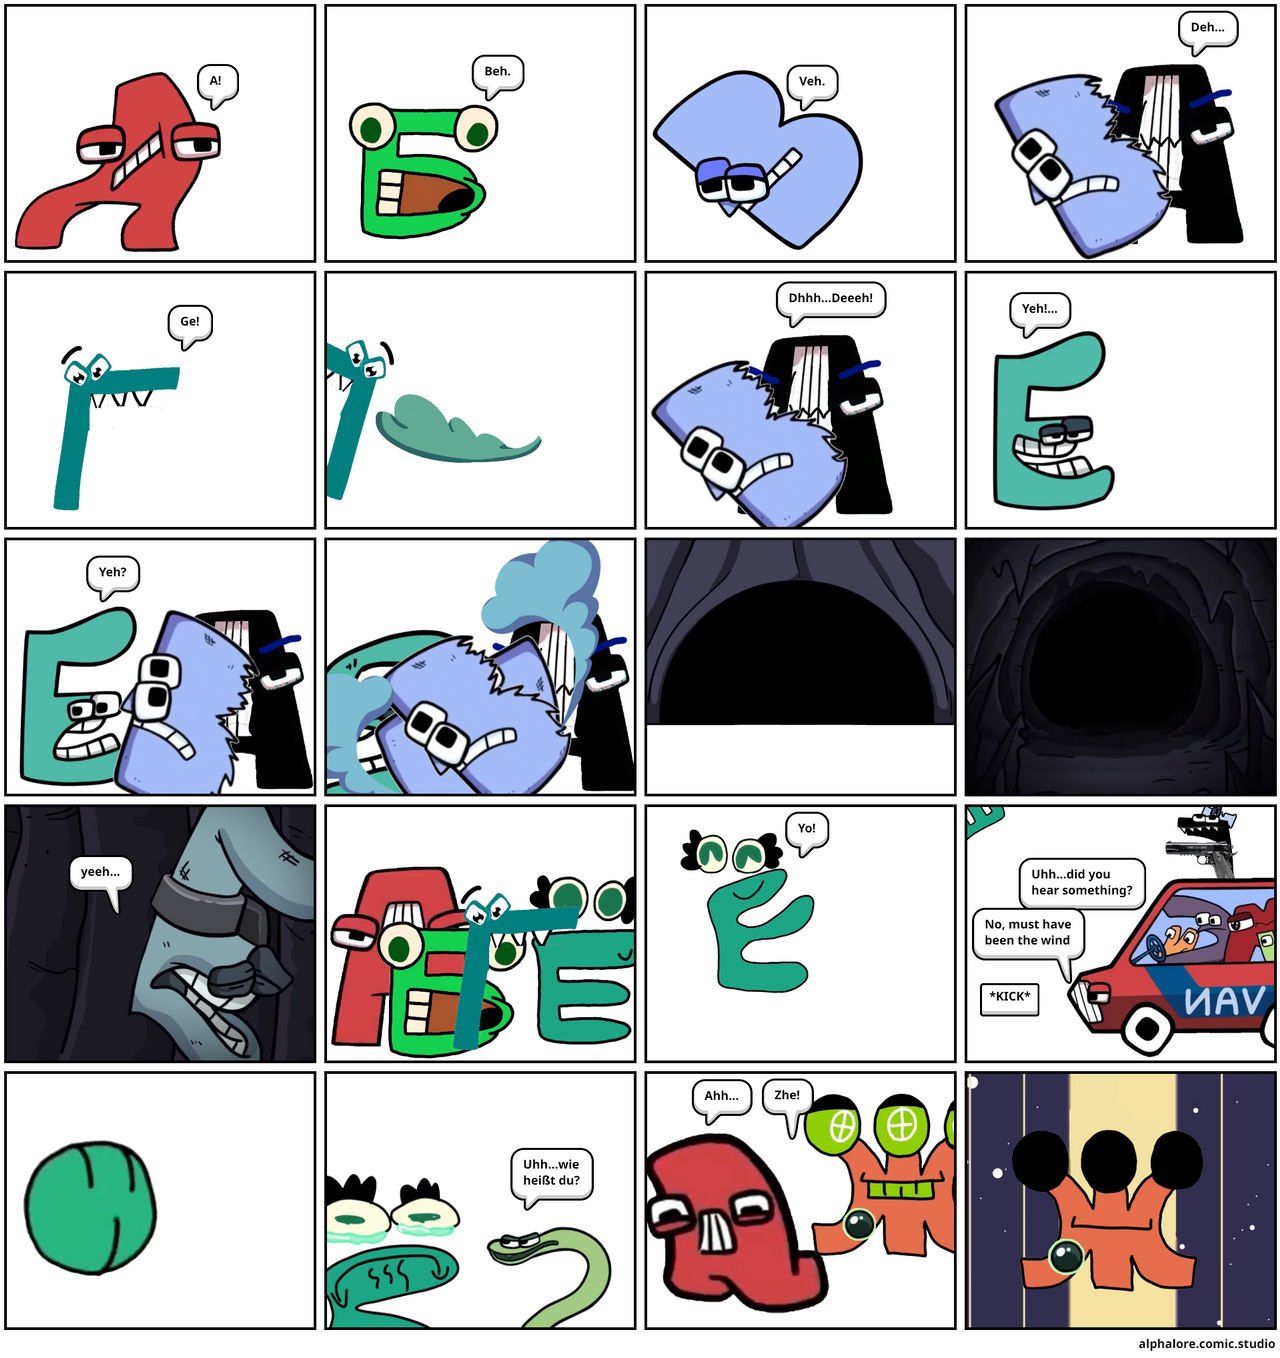 Comic 7: Alphabet lore in a nutshell